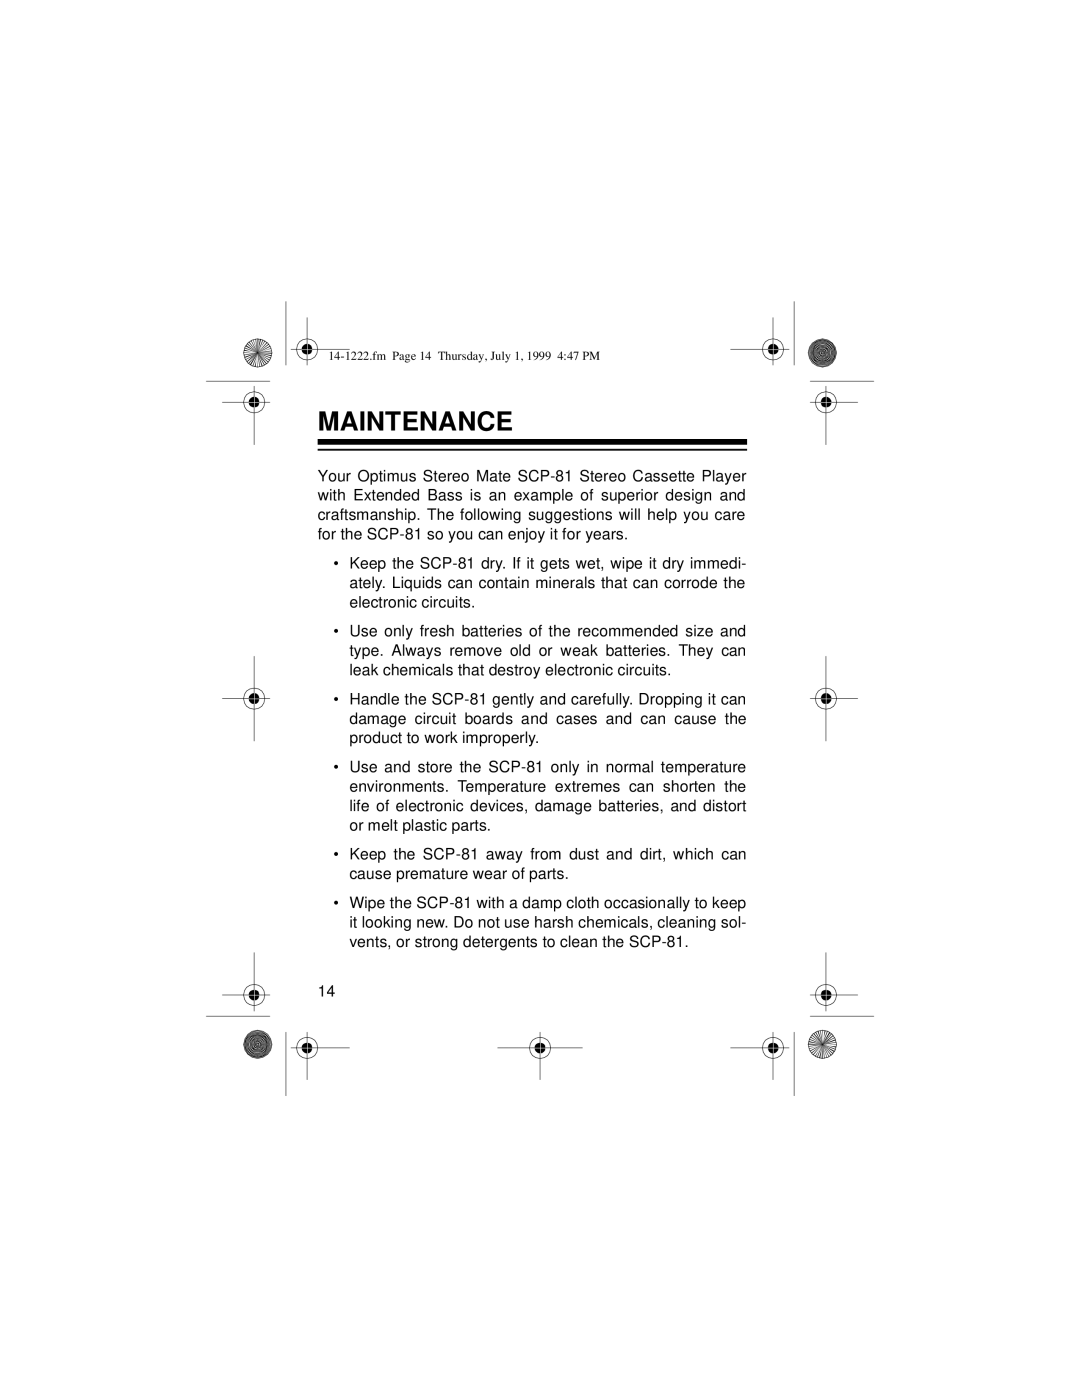 Radio Shack SCP-81, 14-1222 owner manual Maintenance 